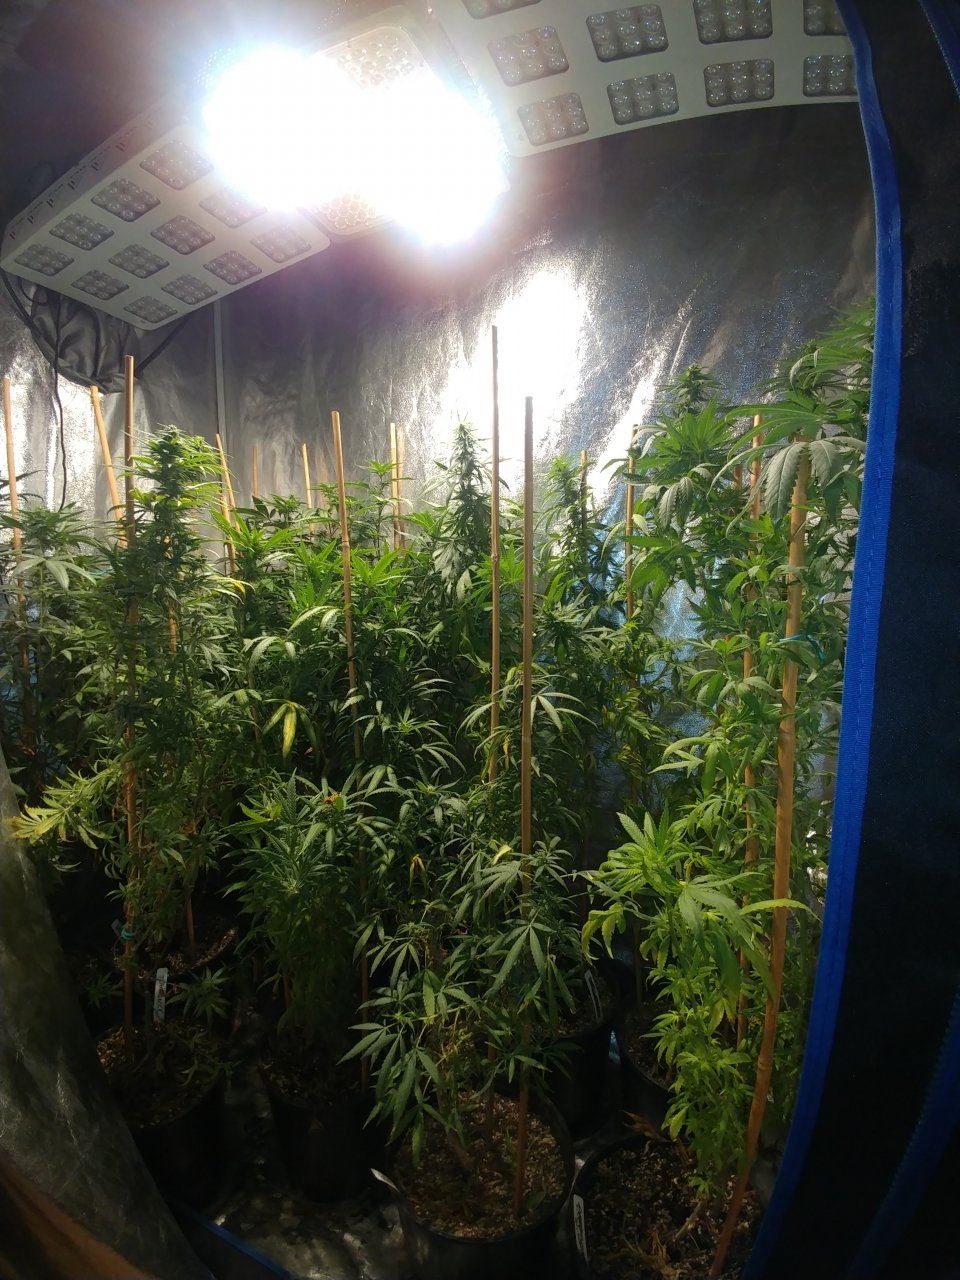 Icemud_bangi haze_cannabis_seed_grow_led grow light (1).jpg